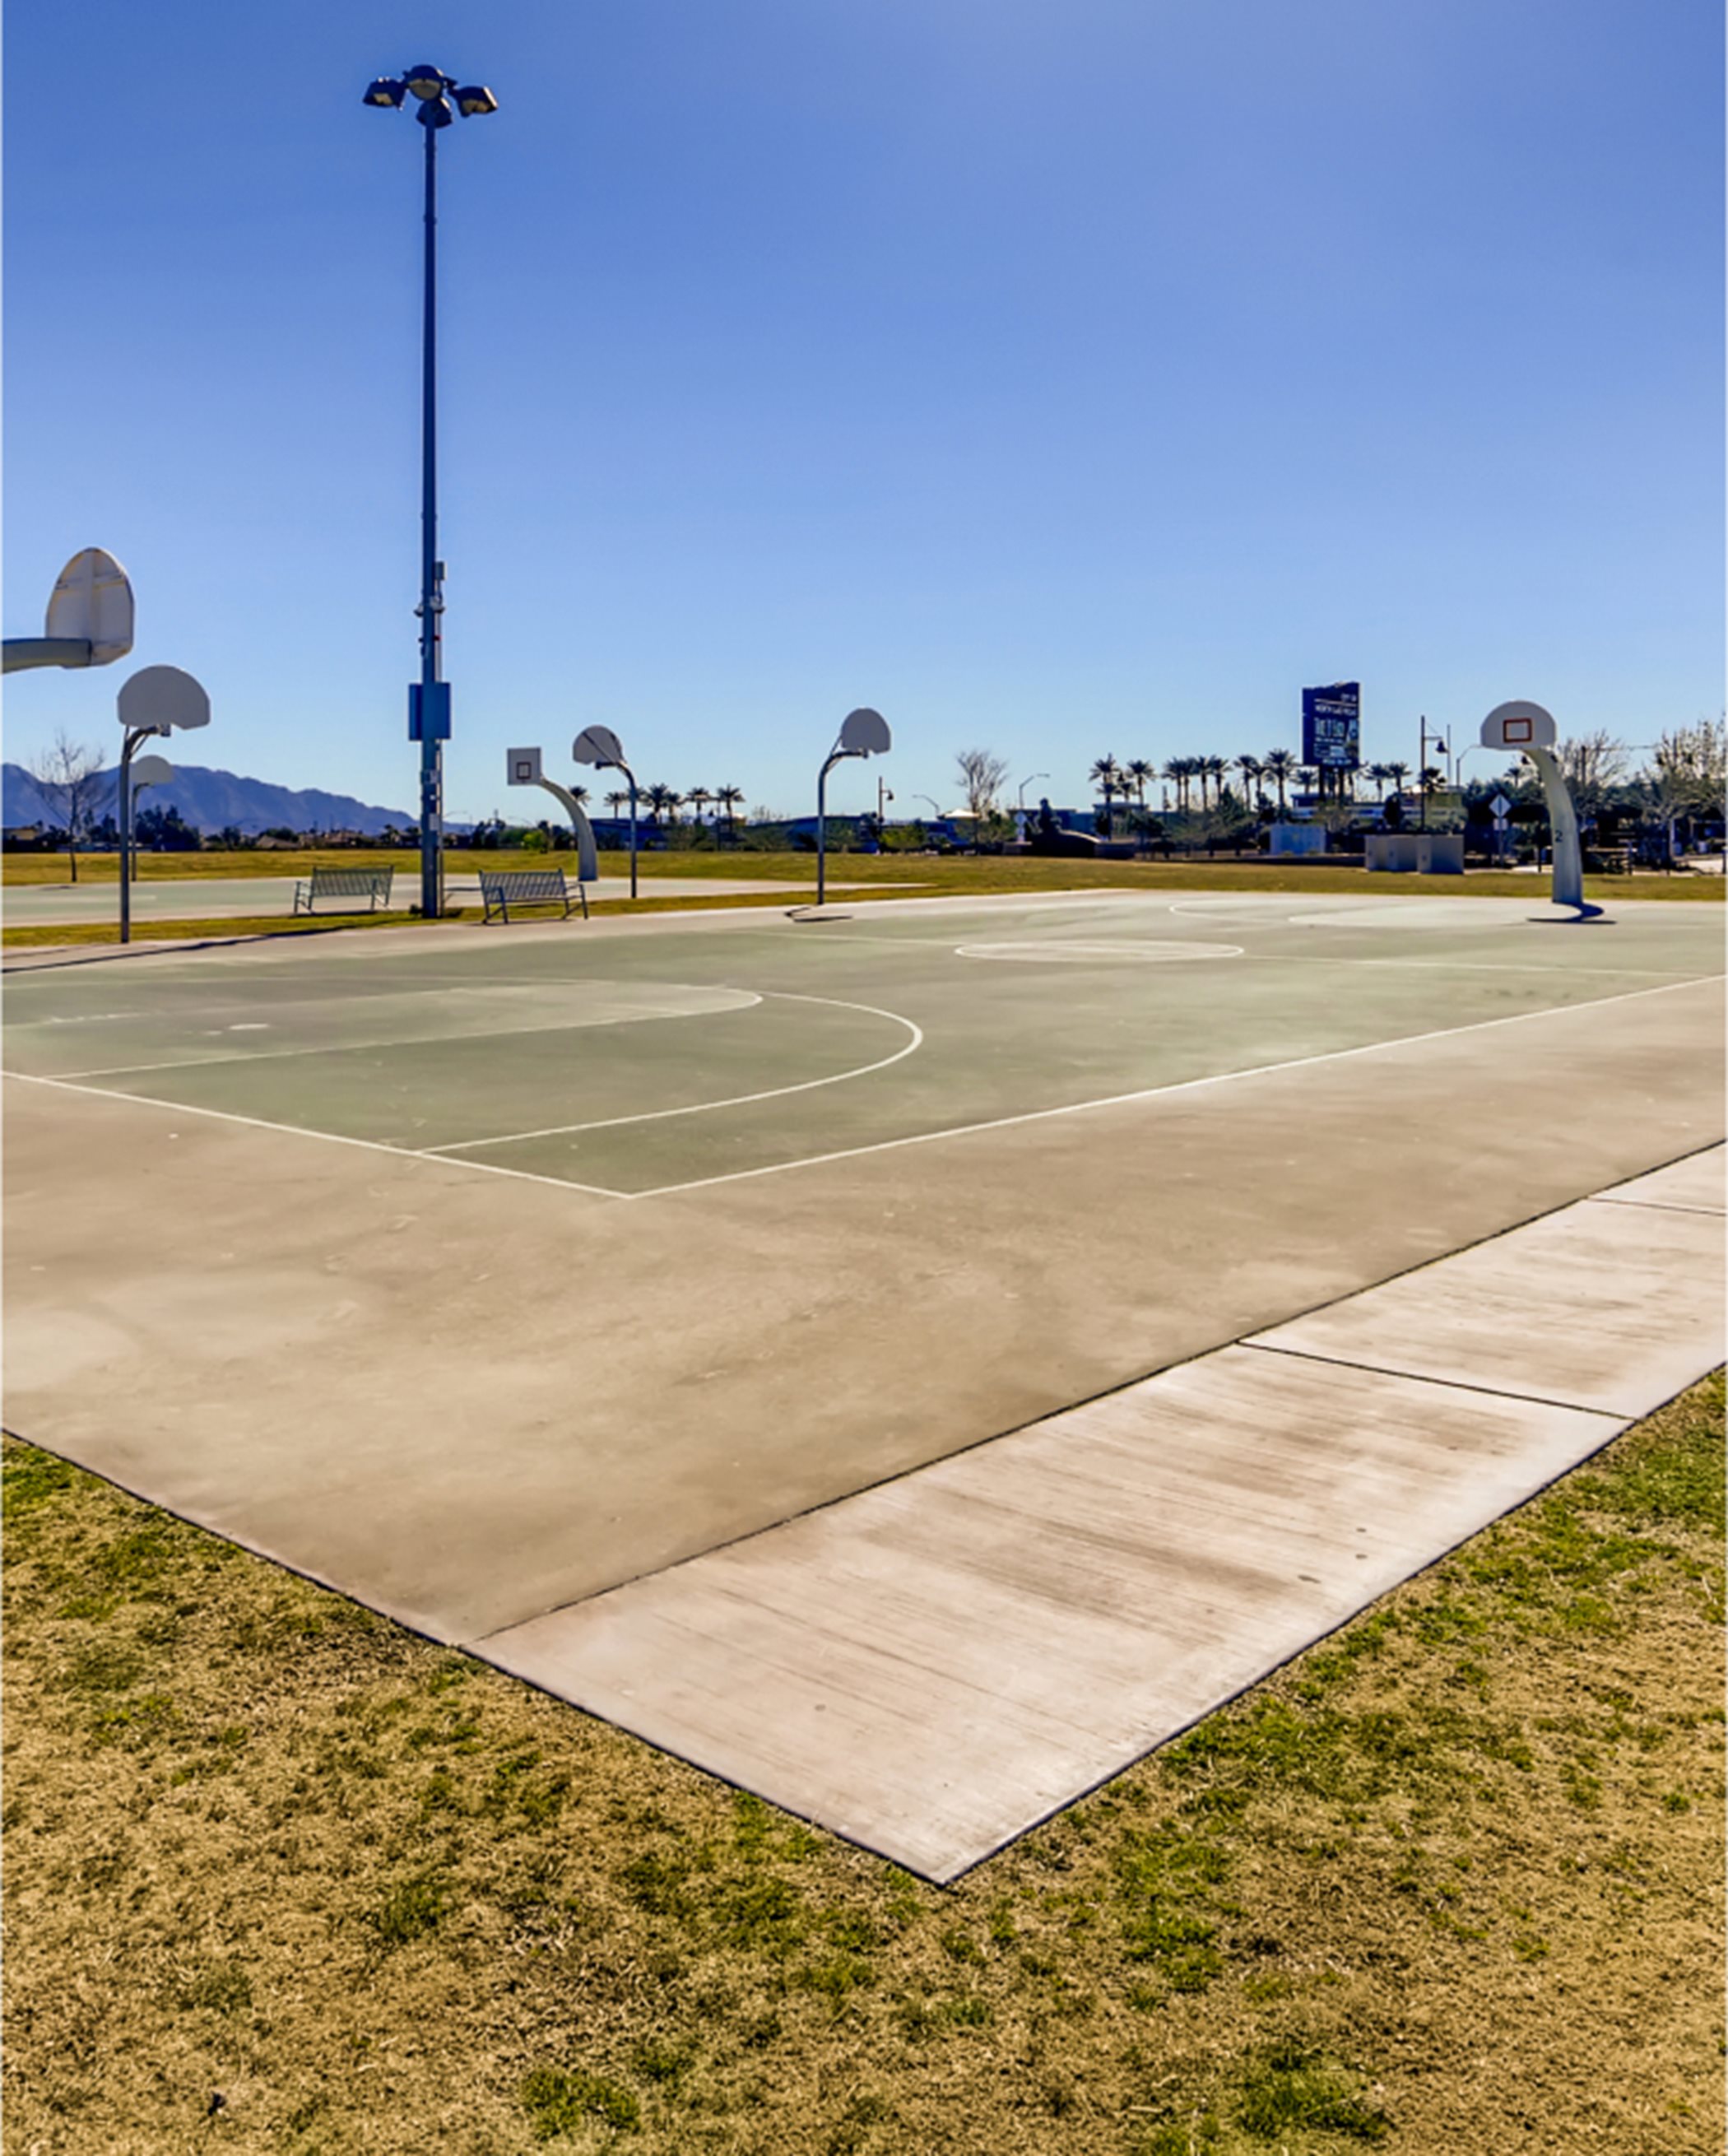 Valley Vista Craig Ranch Park features basketball courts